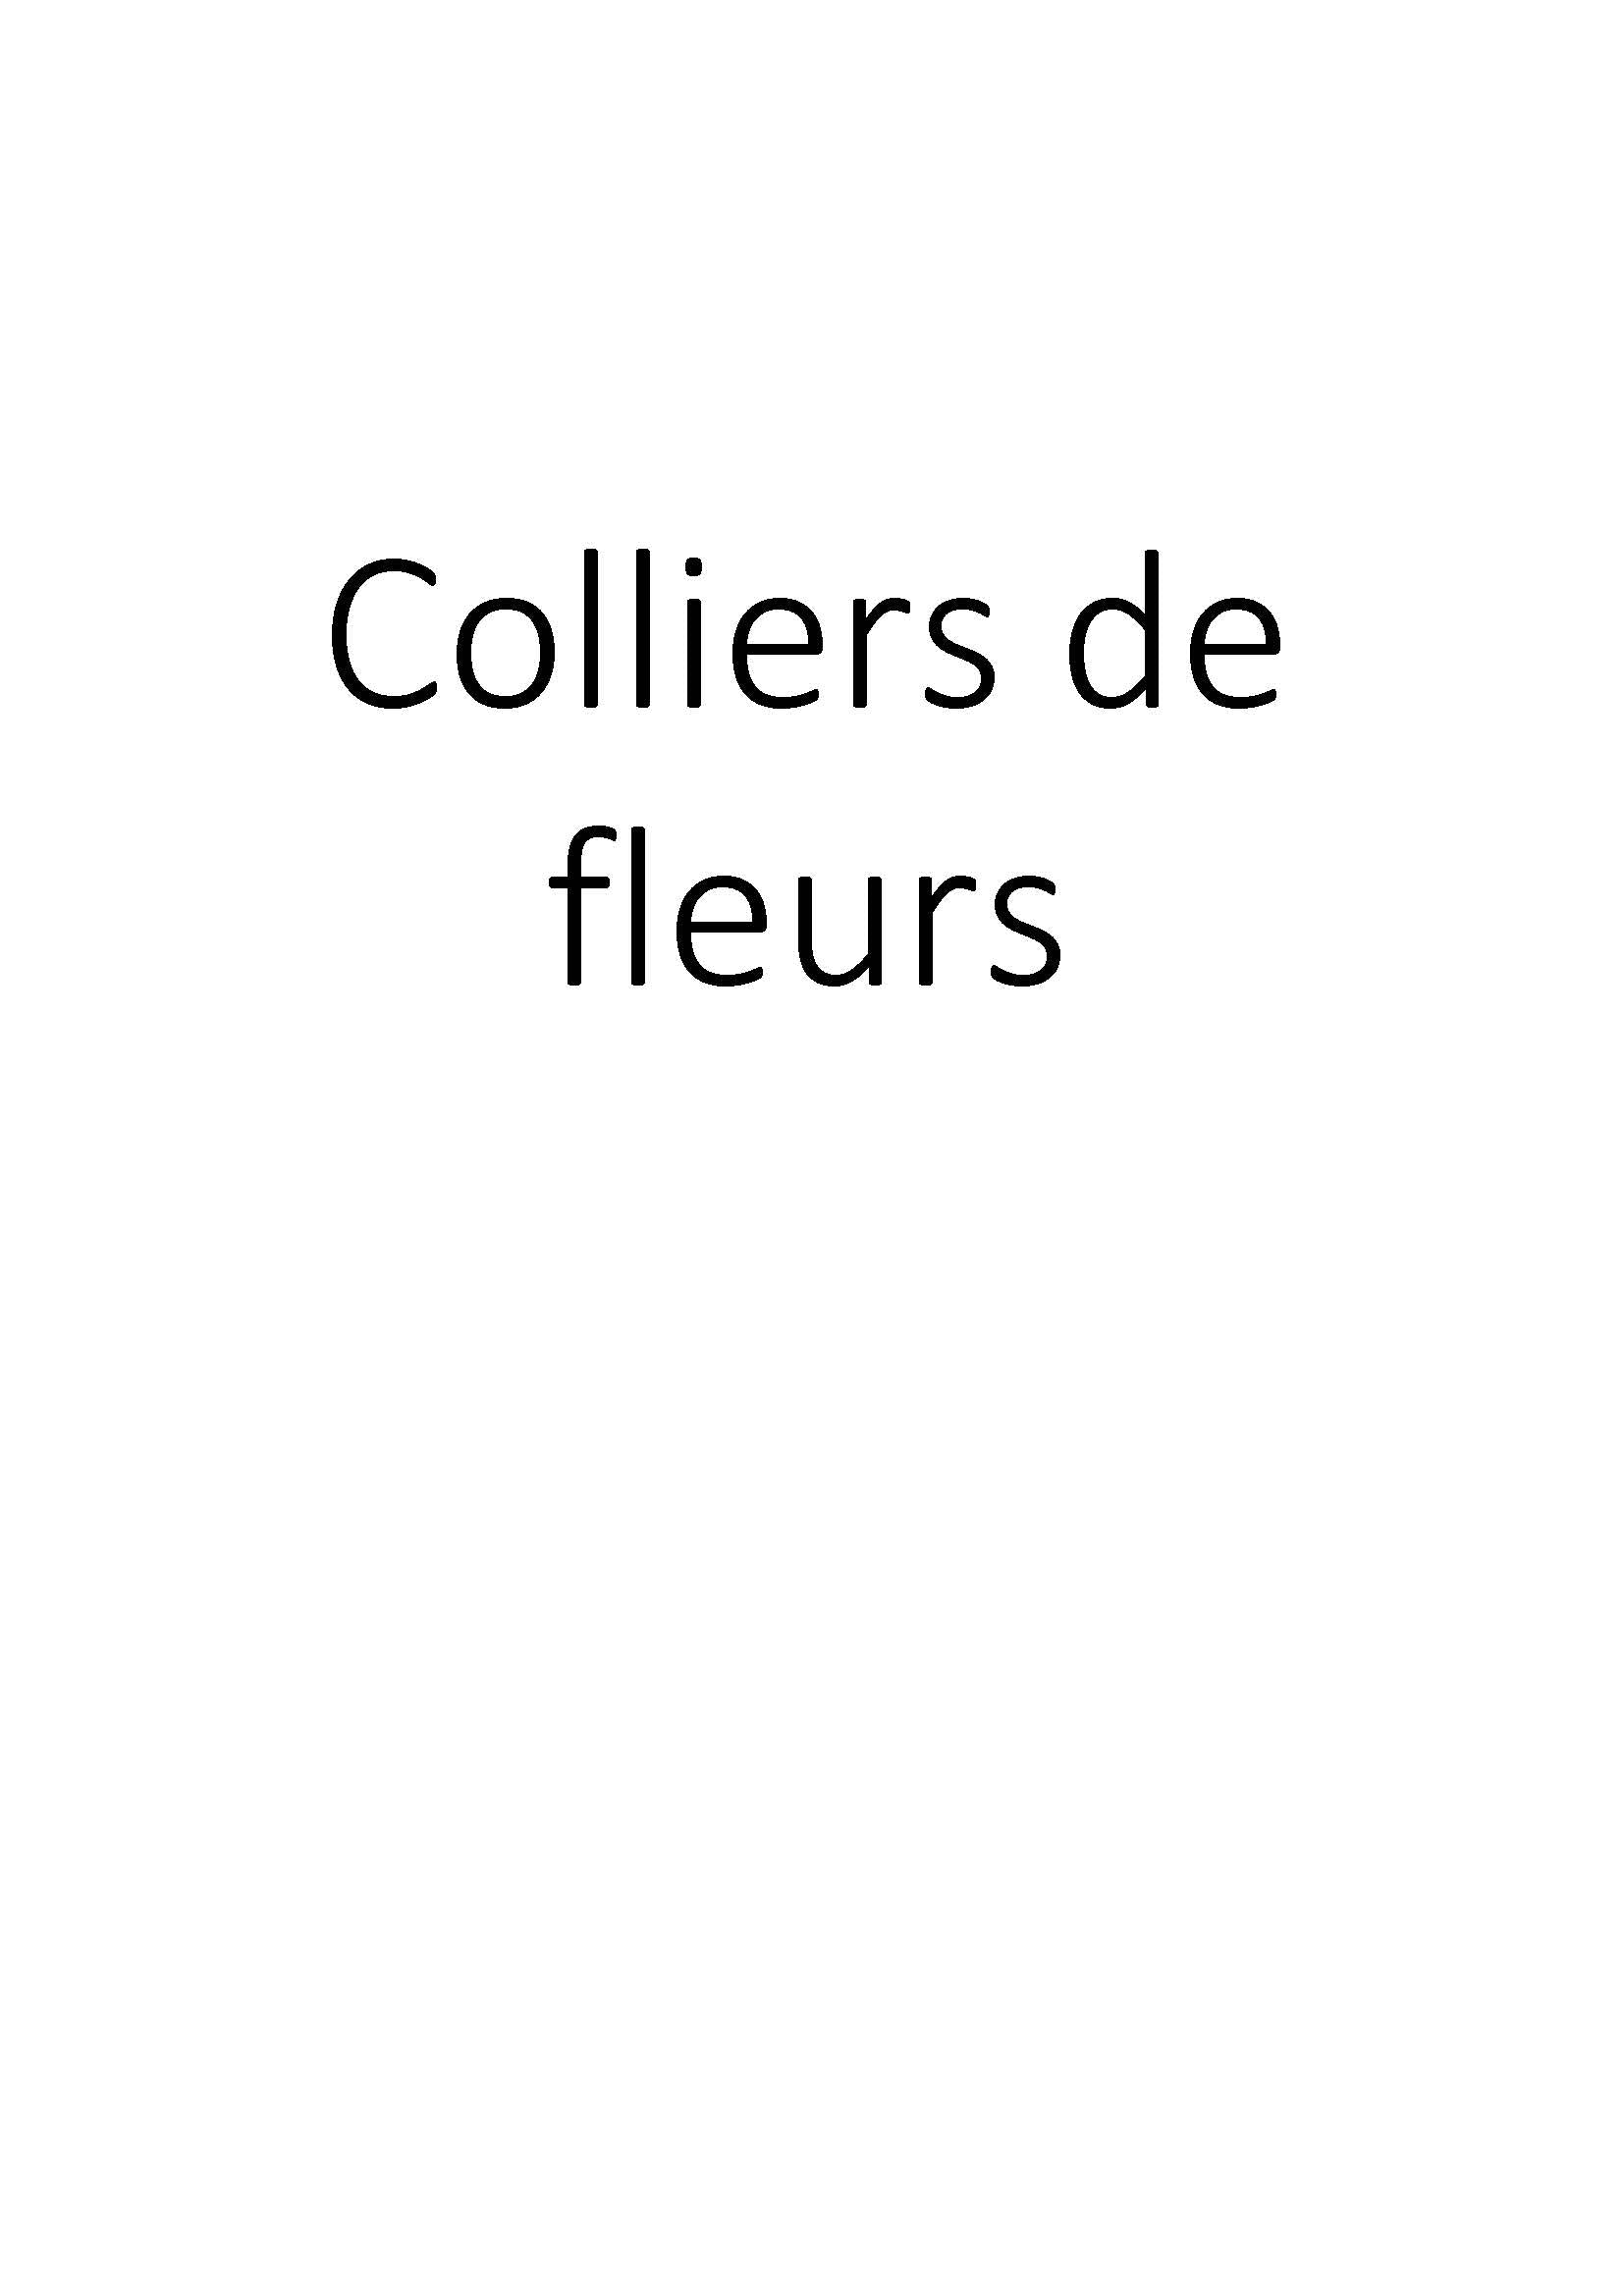 Colliers de fleurs clicktofournisseur.com